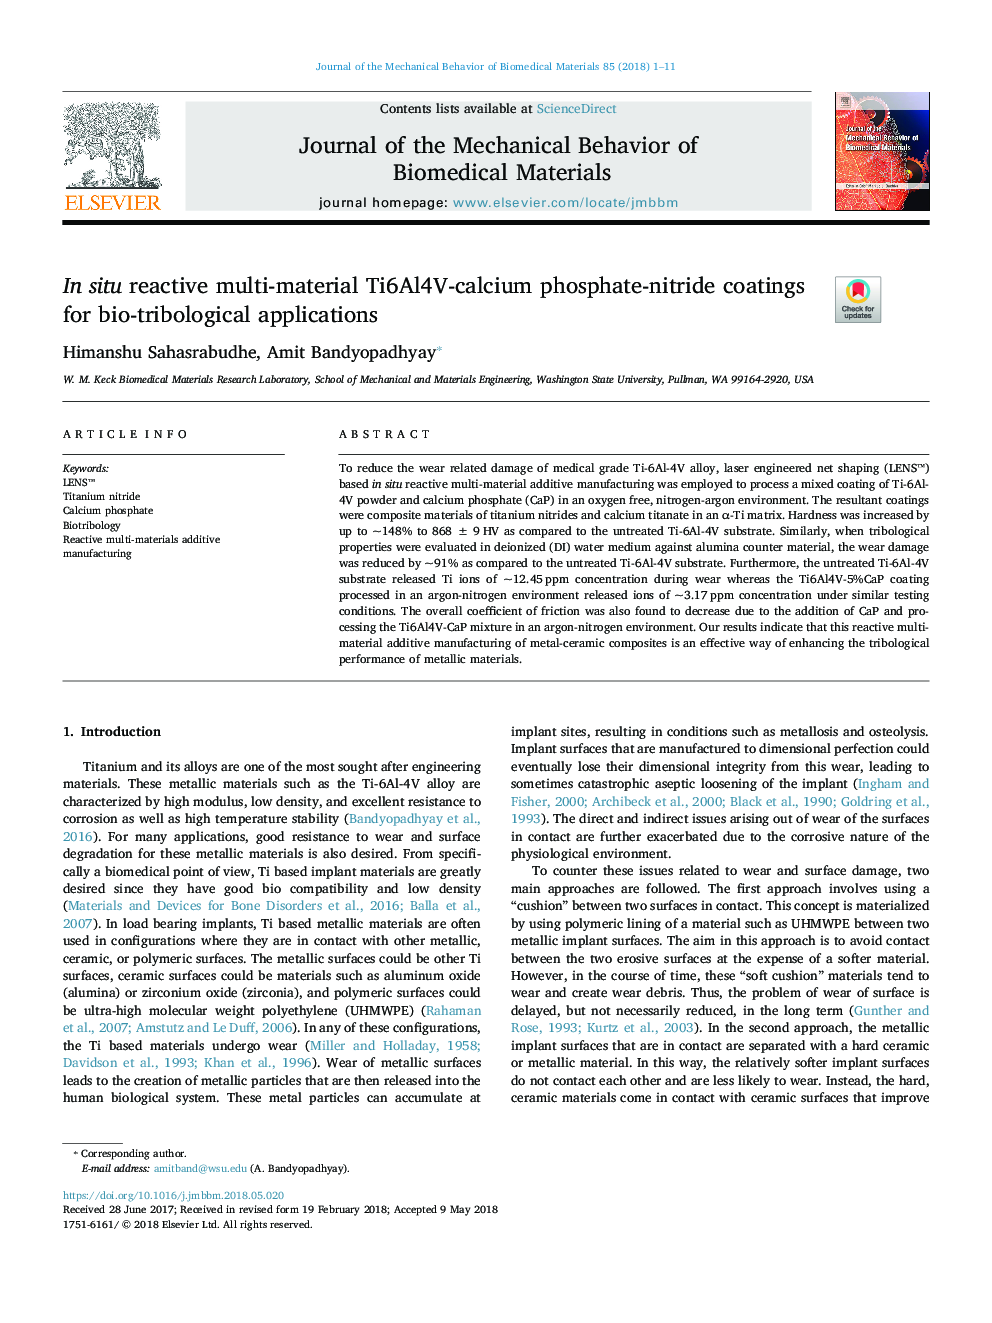 In situ reactive multi-material Ti6Al4V-calcium phosphate-nitride coatings for bio-tribological applications